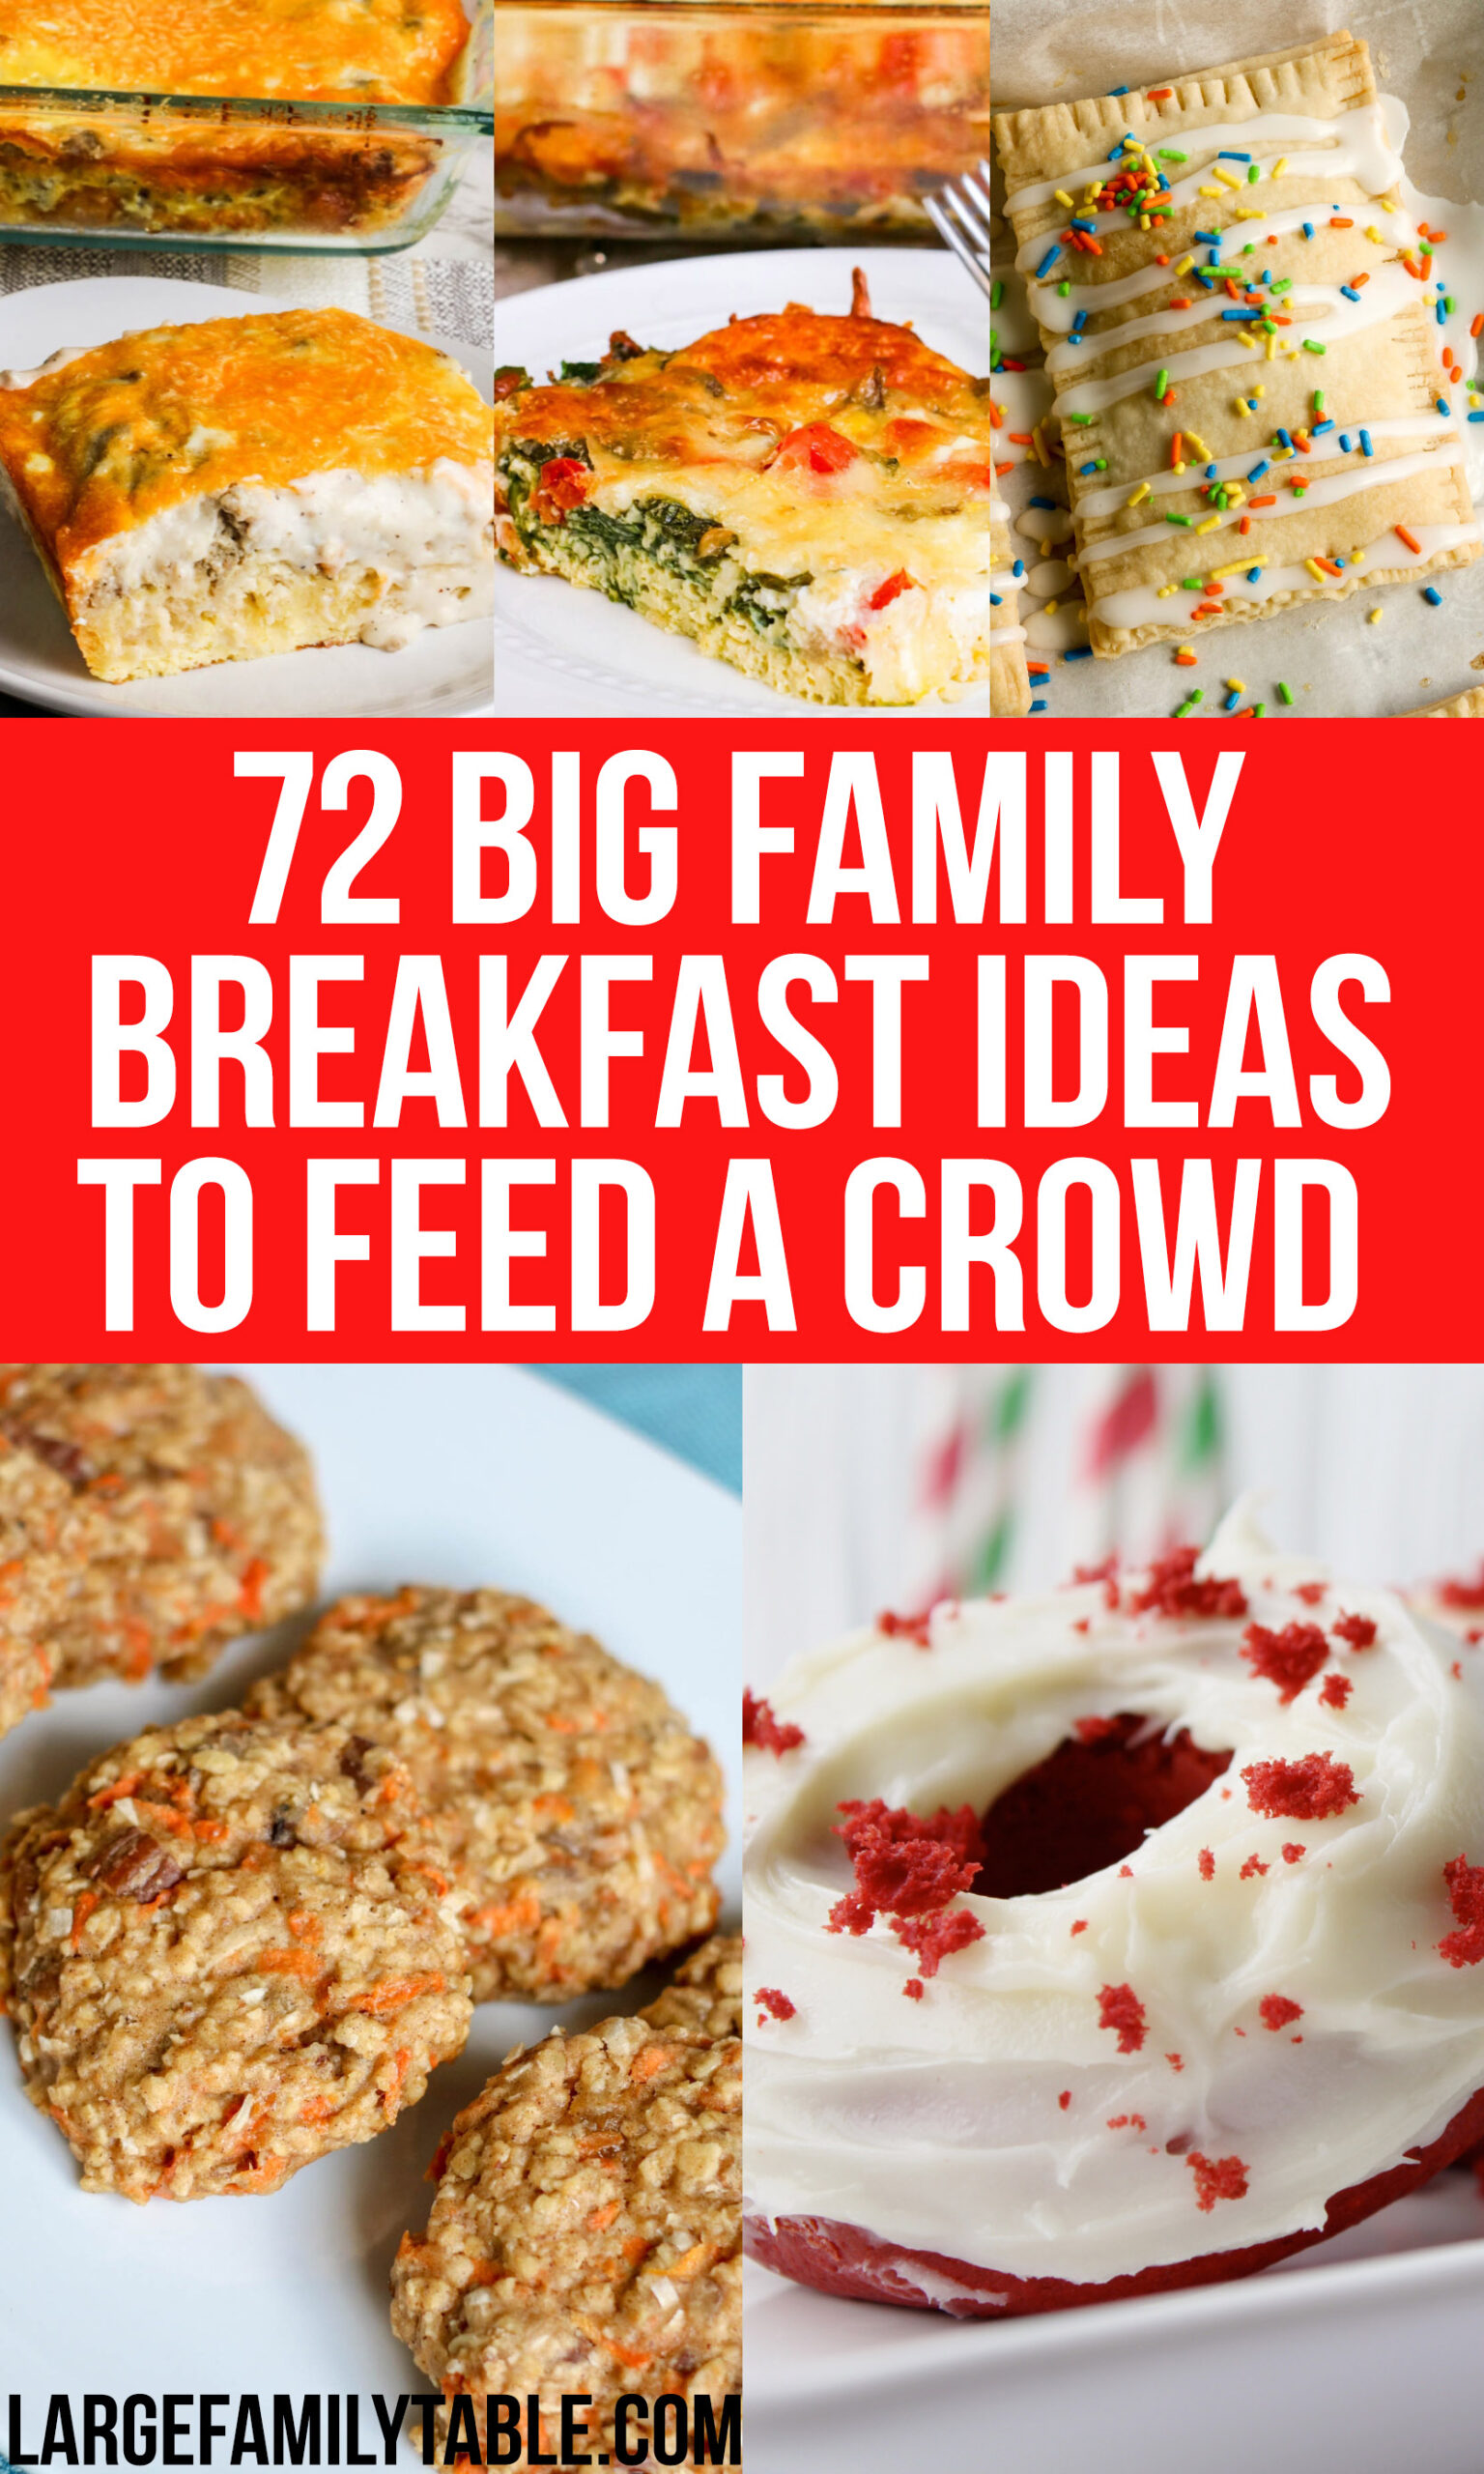 72-Big-Family-Breakfast-Ideas-to-Feed-a-Crowd-edit-1